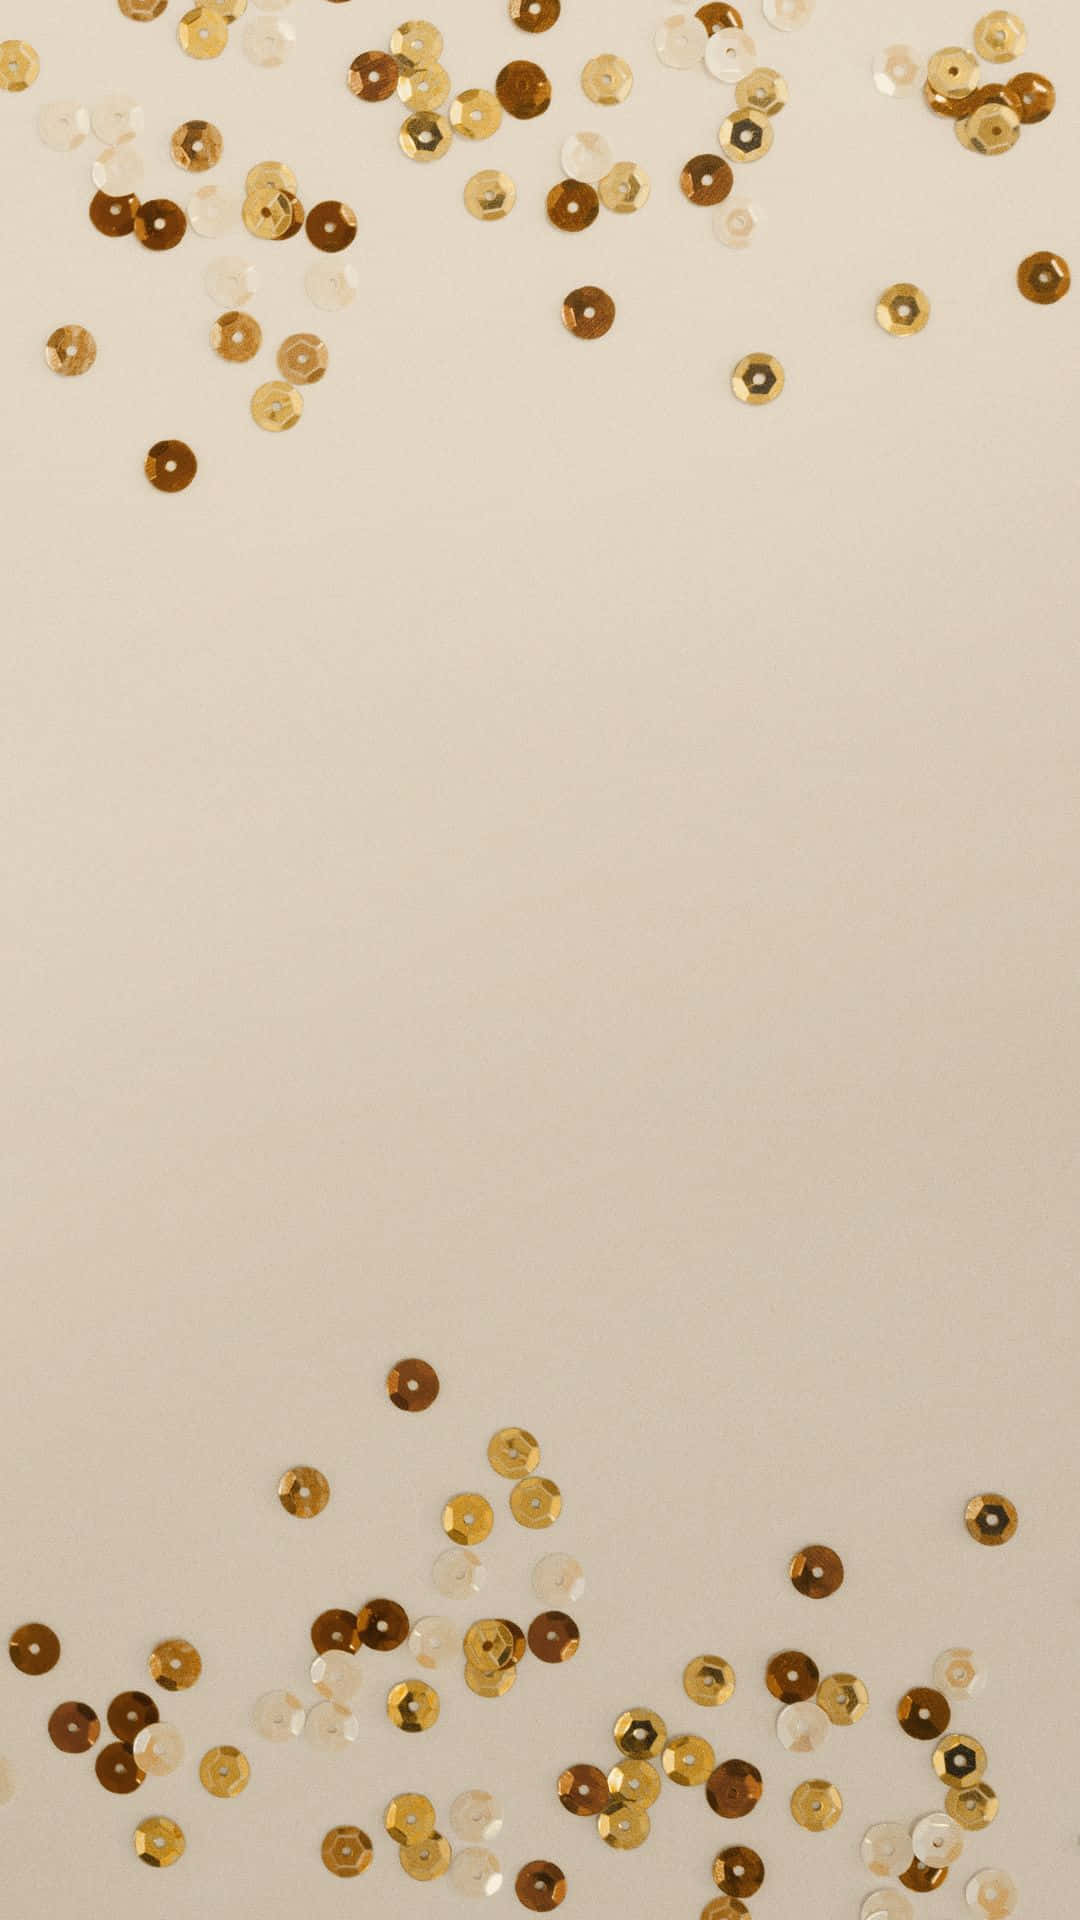 A Stunning, Sleek And Stylish Gold Iphone Background